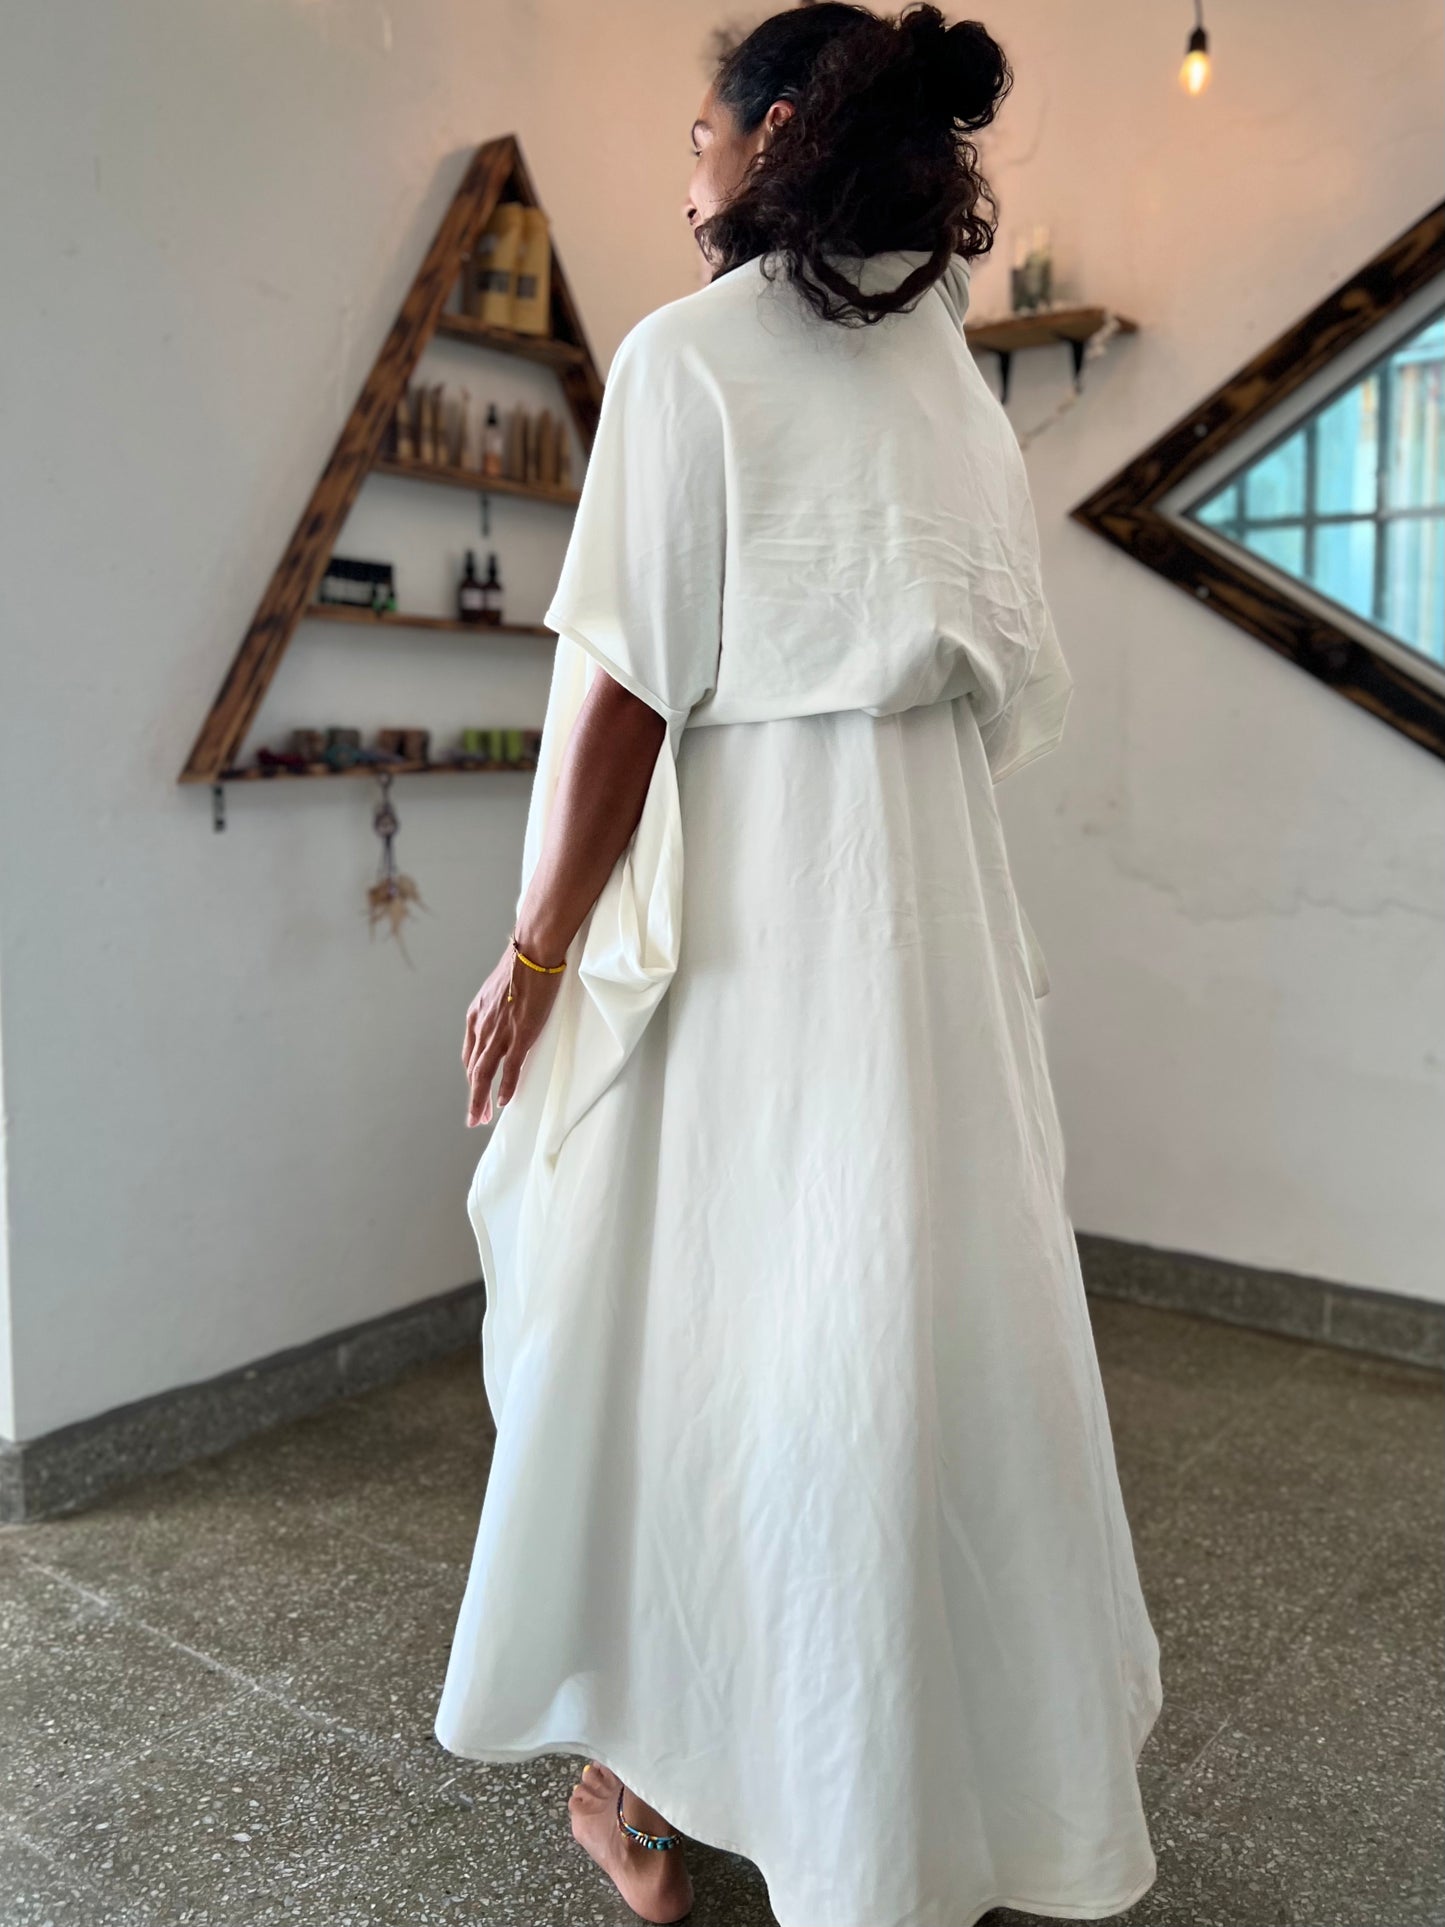 glorka white dress and shawl